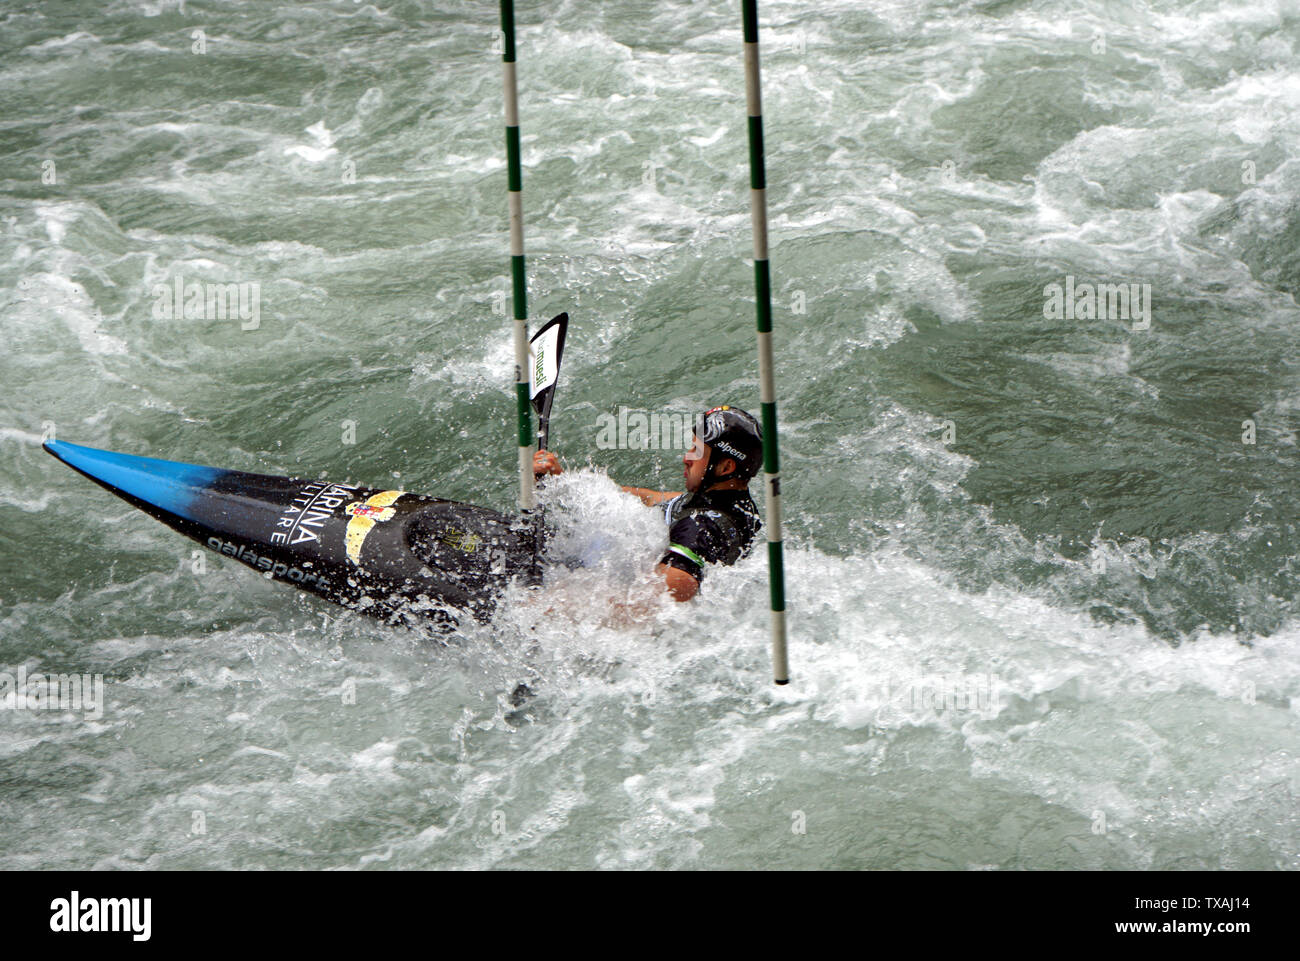 Single canoeist on the Passer River, Merano, Italy in 2019 ICF race Stock Photo